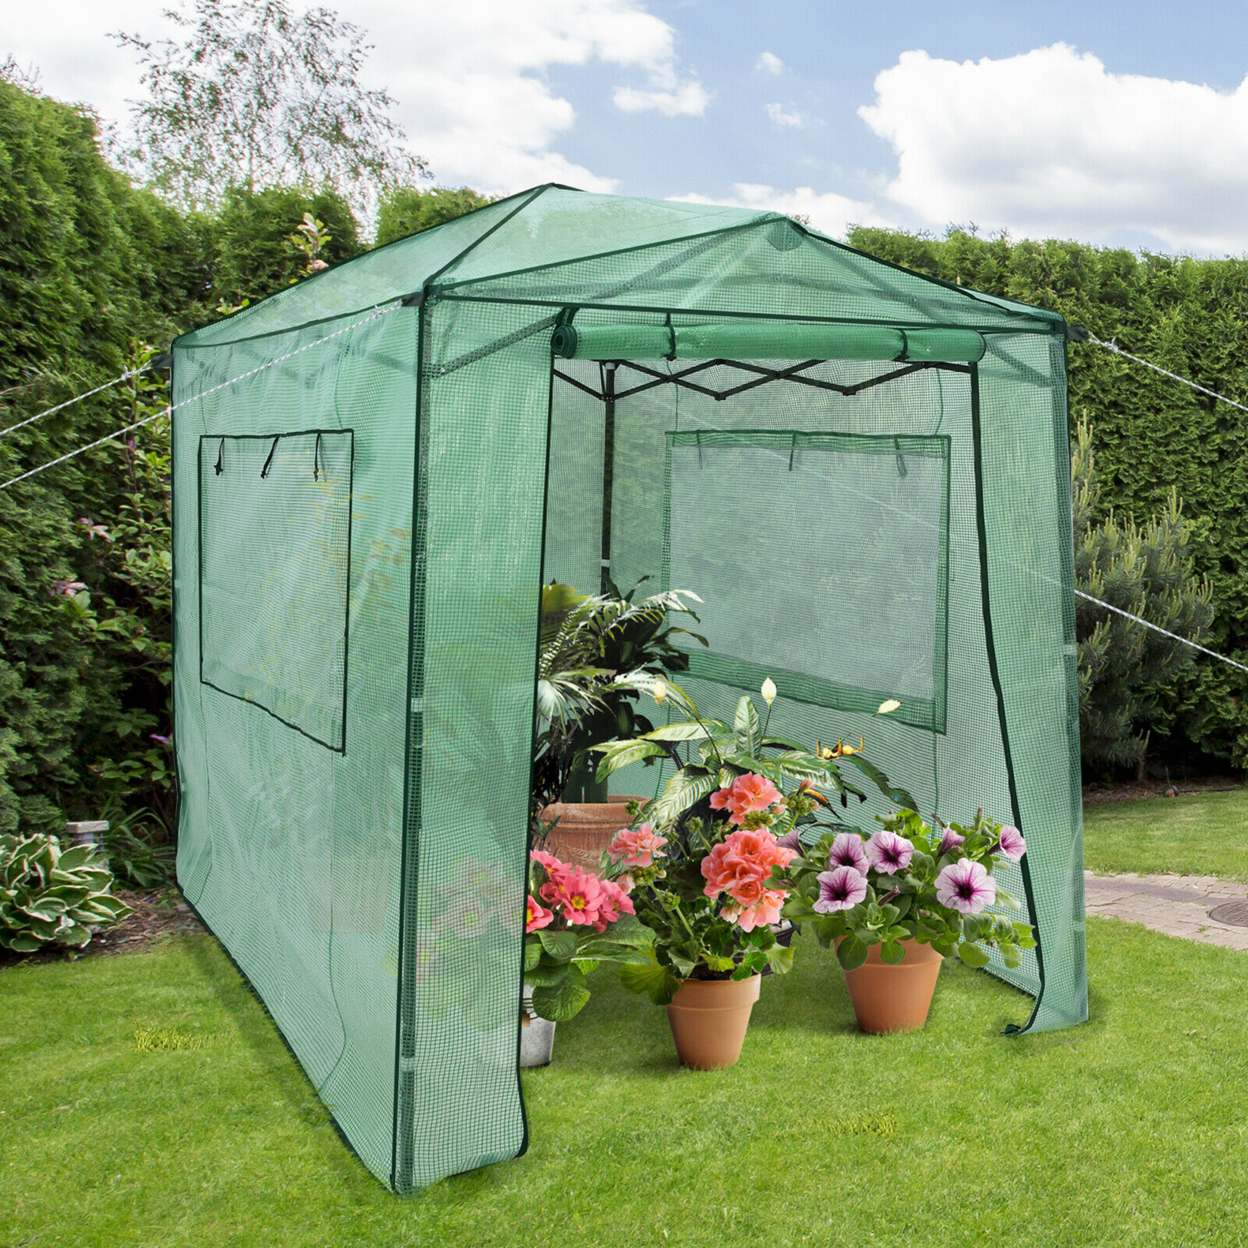 6'x 8' Portable Walk-in Greenhouse Pop-up Folding Plant Gardening W/ Window